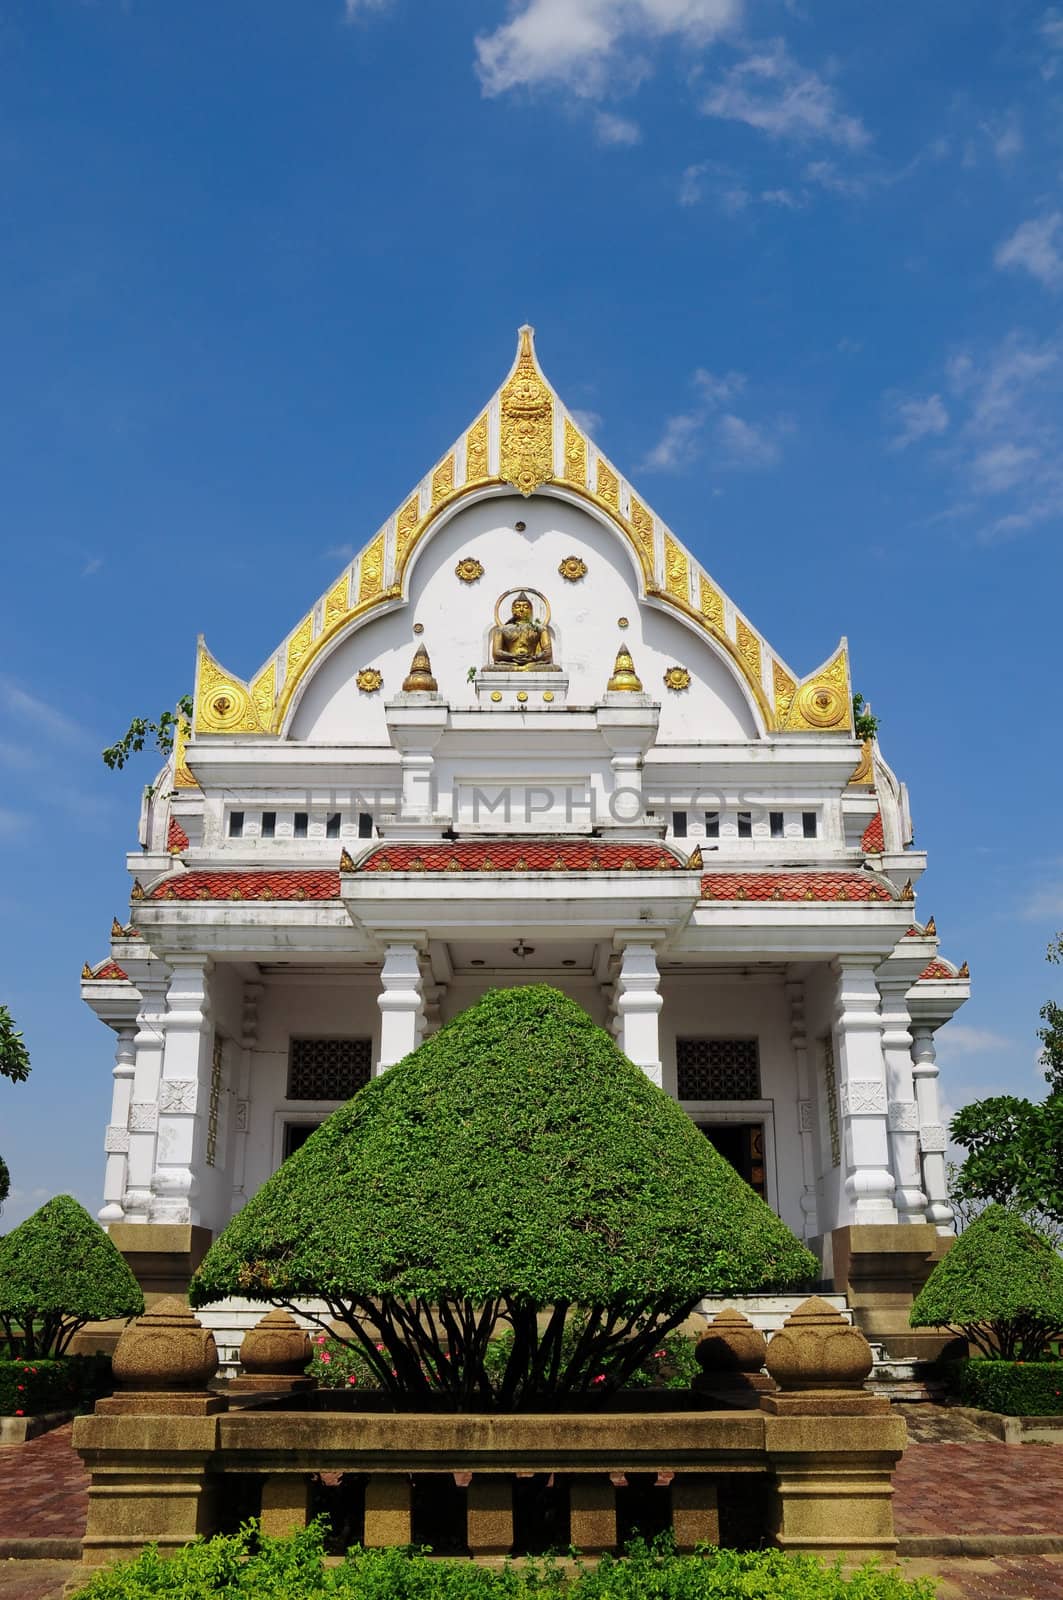 Tripitaka library, Nakhonpathom, thailand by ekawatchaow